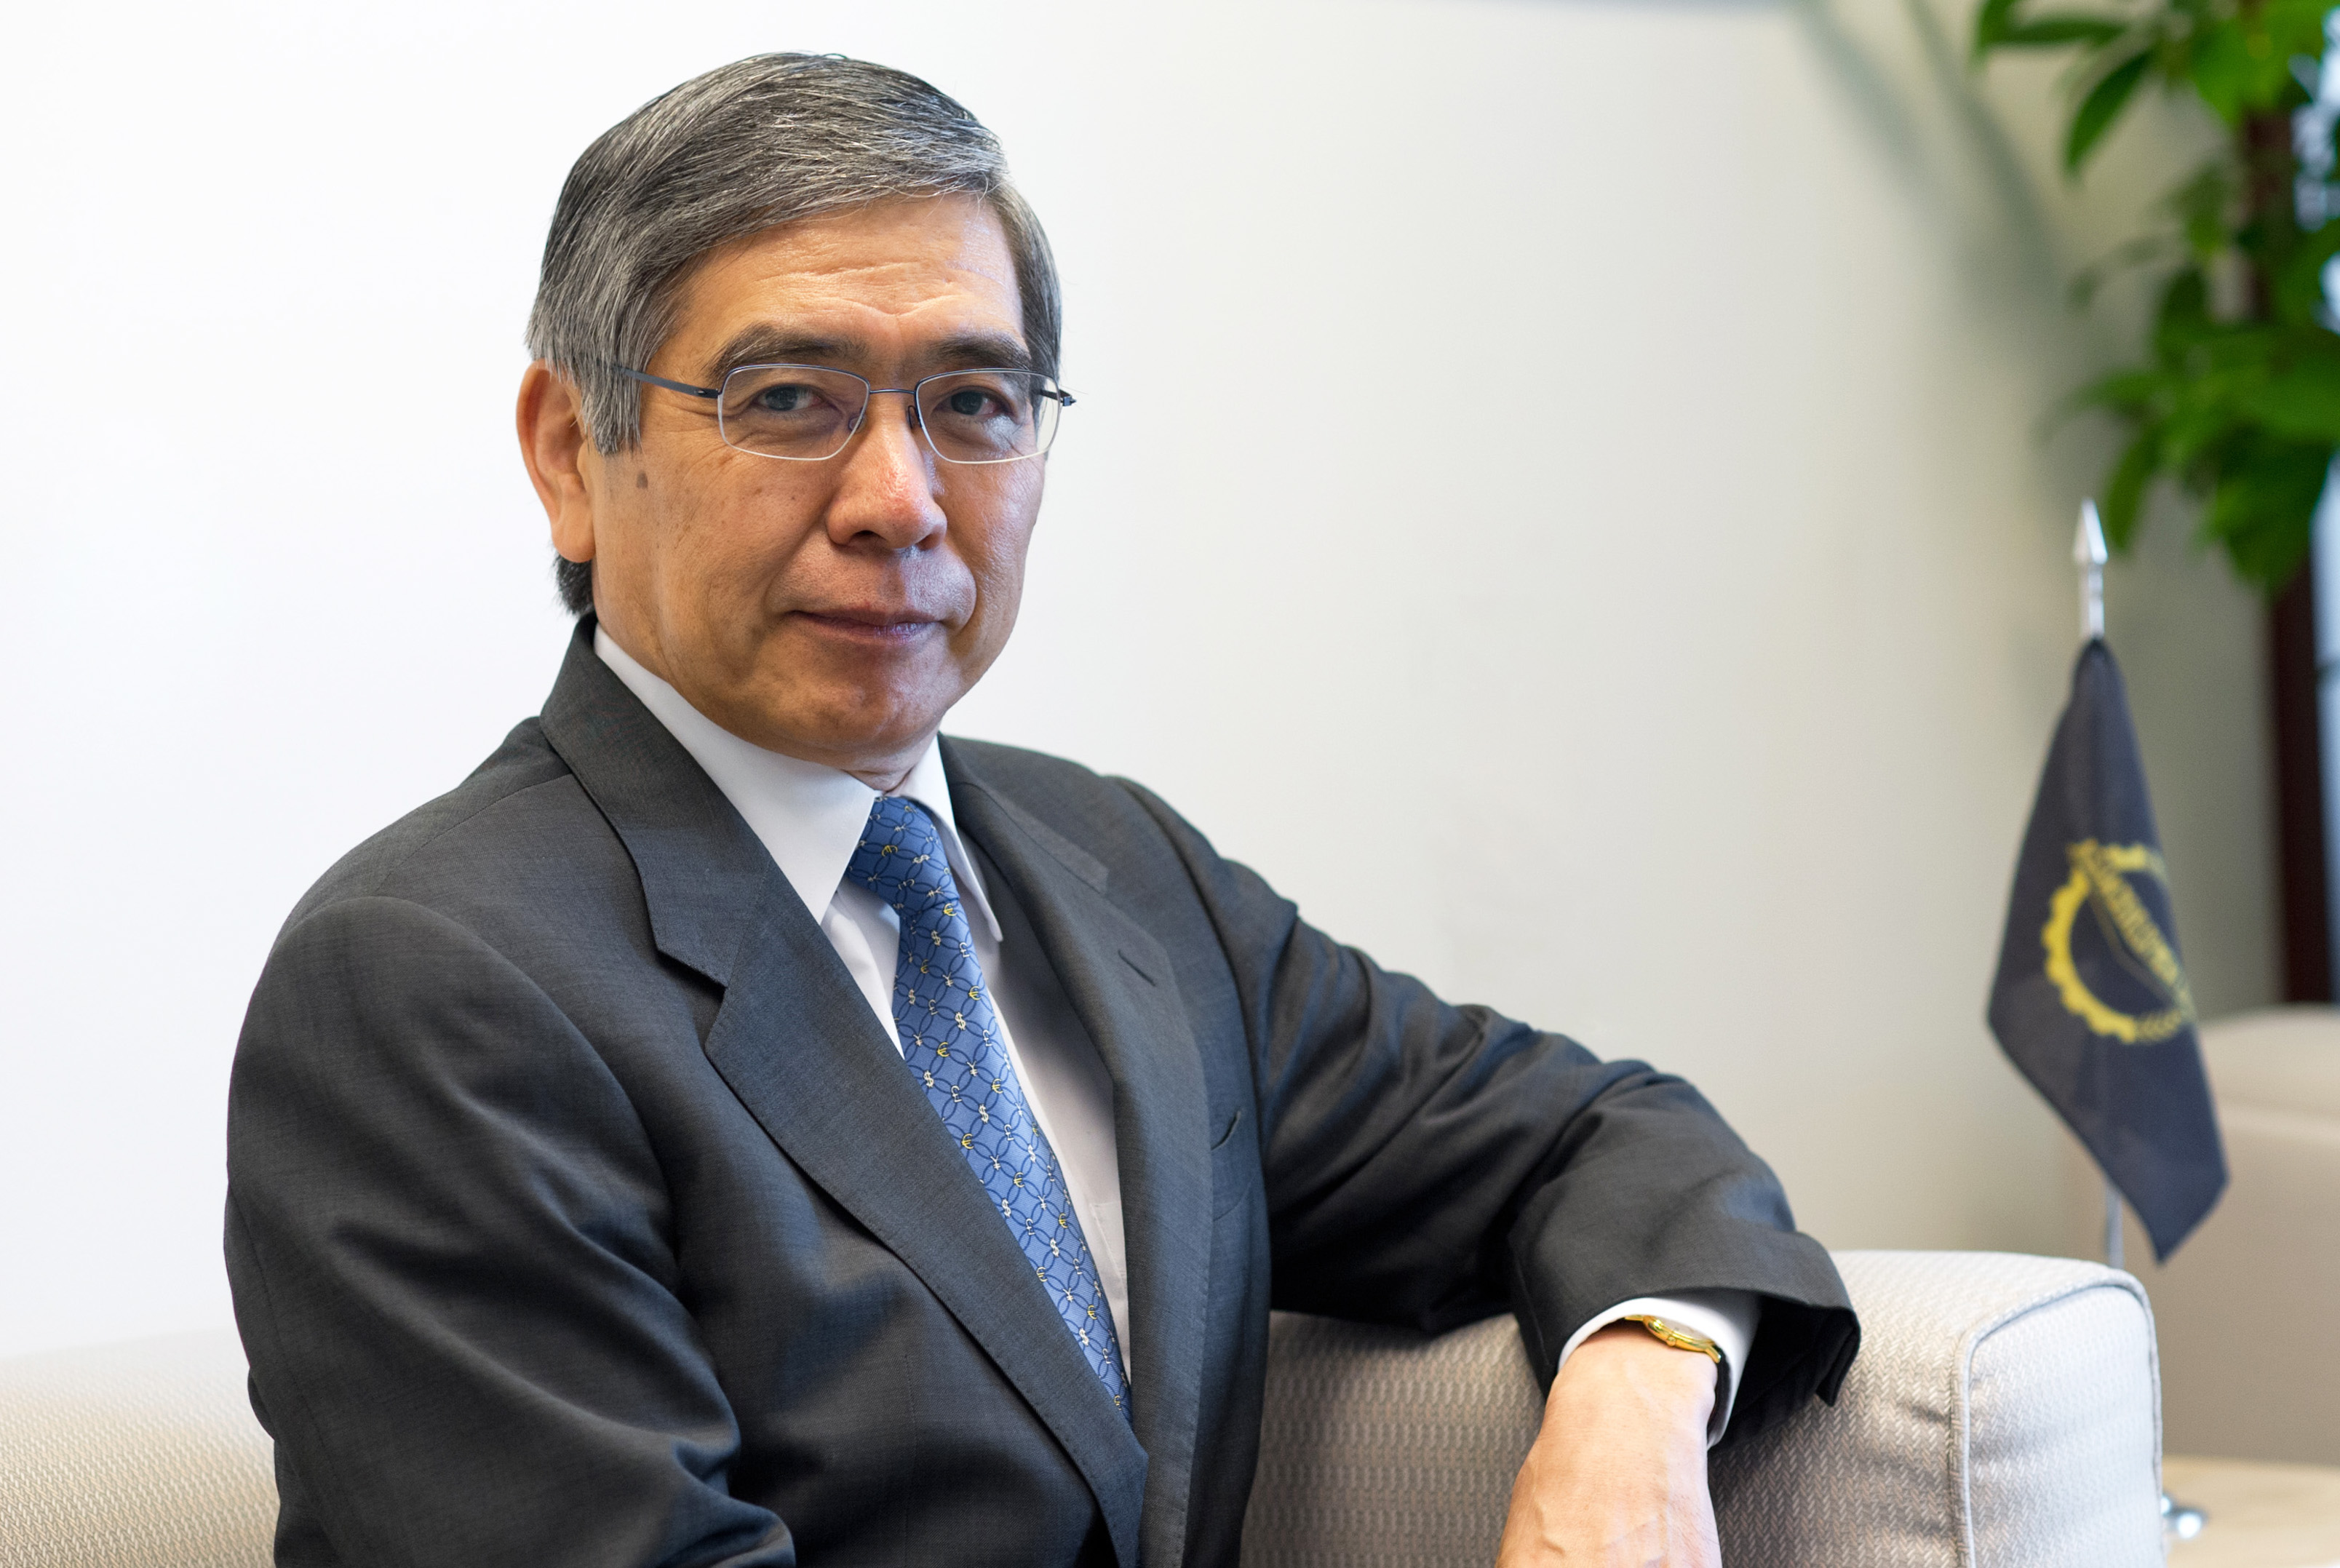 UPDATE 2-BOJ's Kuroda blames yen's fall on strong dollar, upbeat on economy